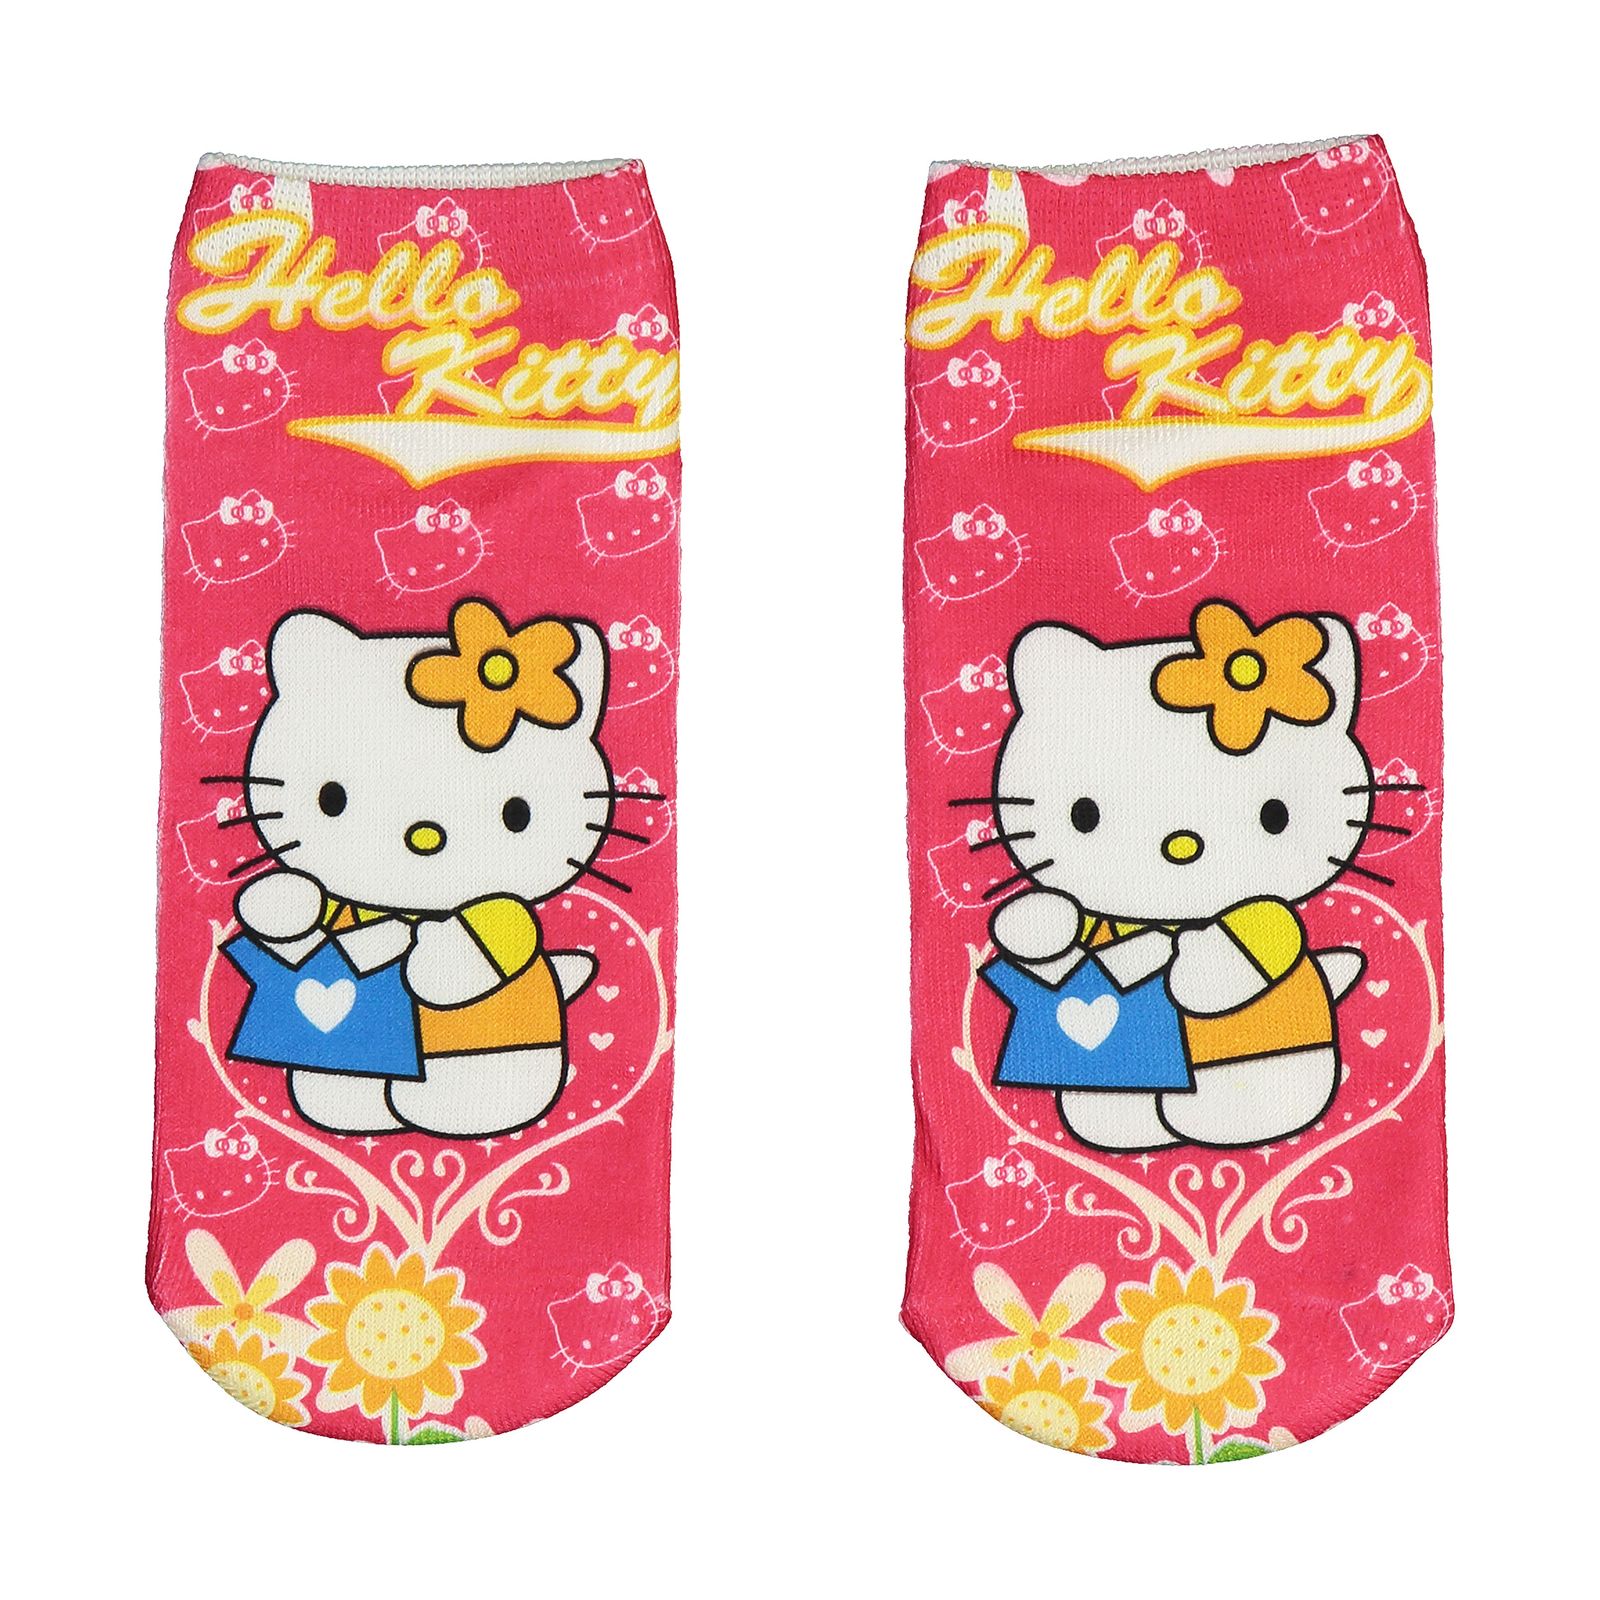 جوراب طرح Hello Kitty 2 -  - 1